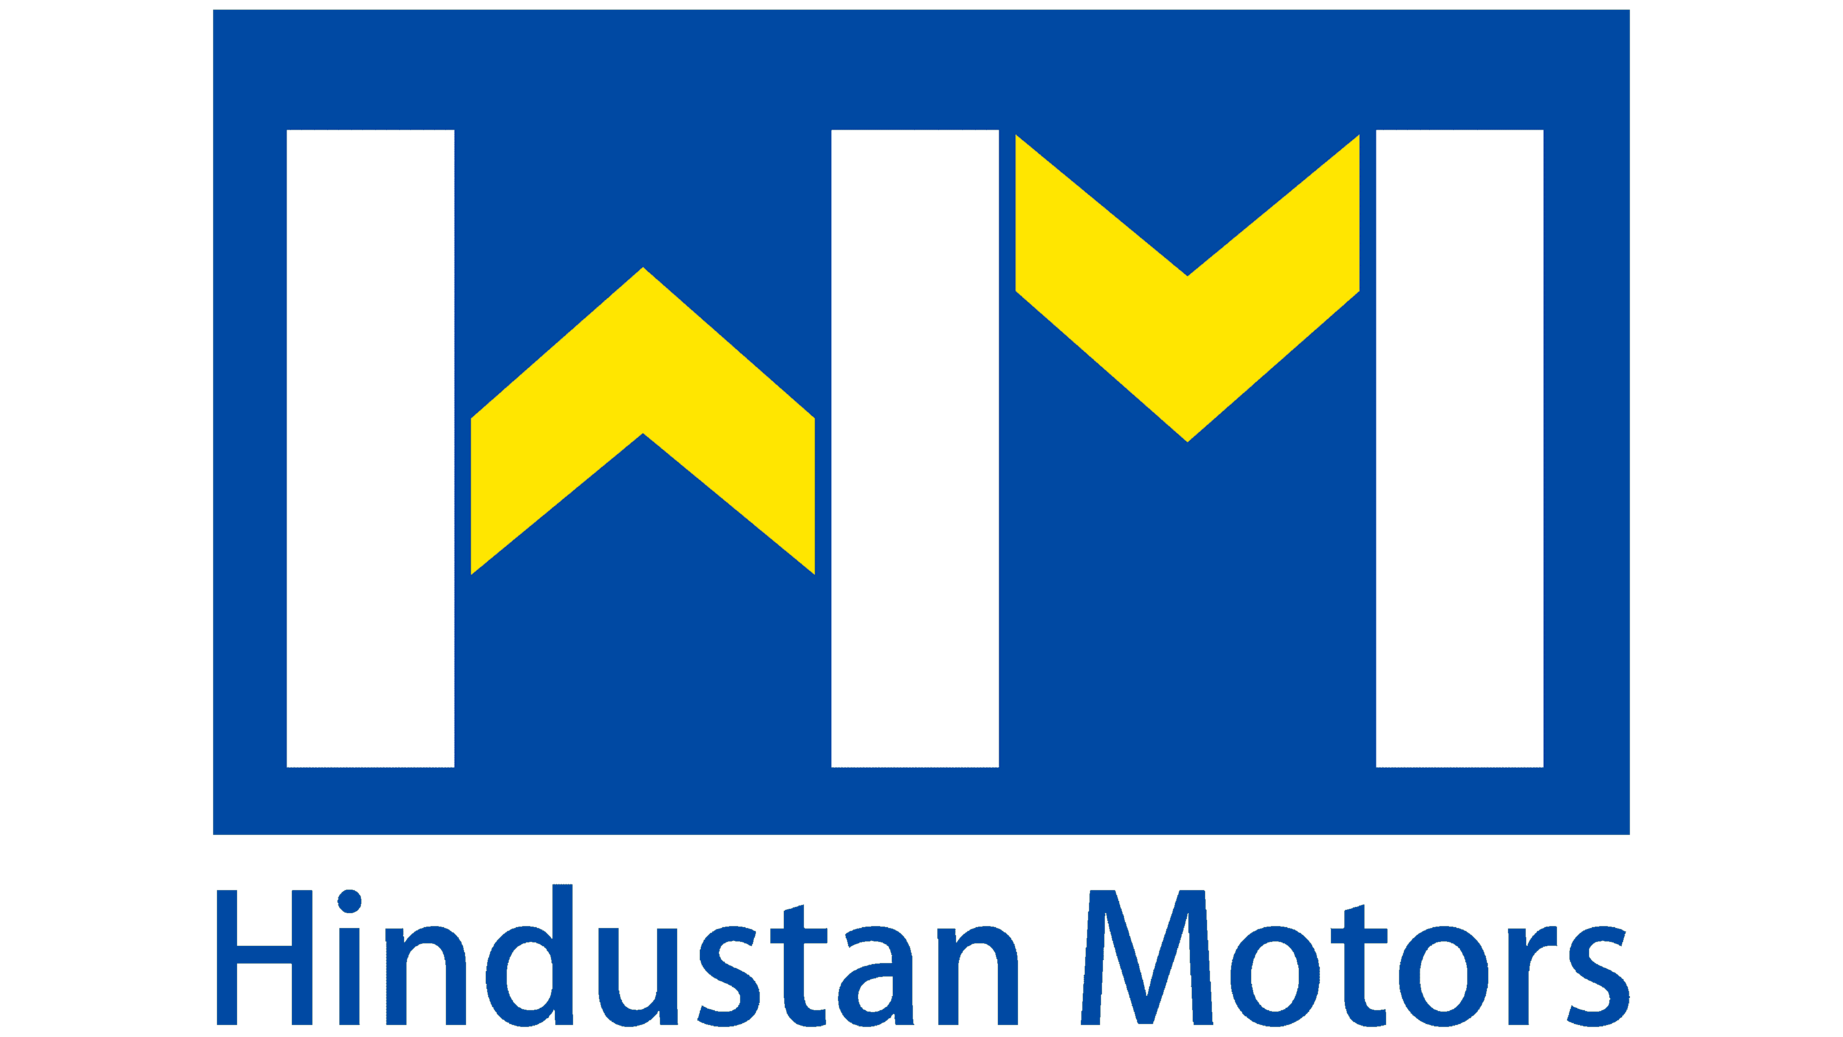 Hindustan motors sign